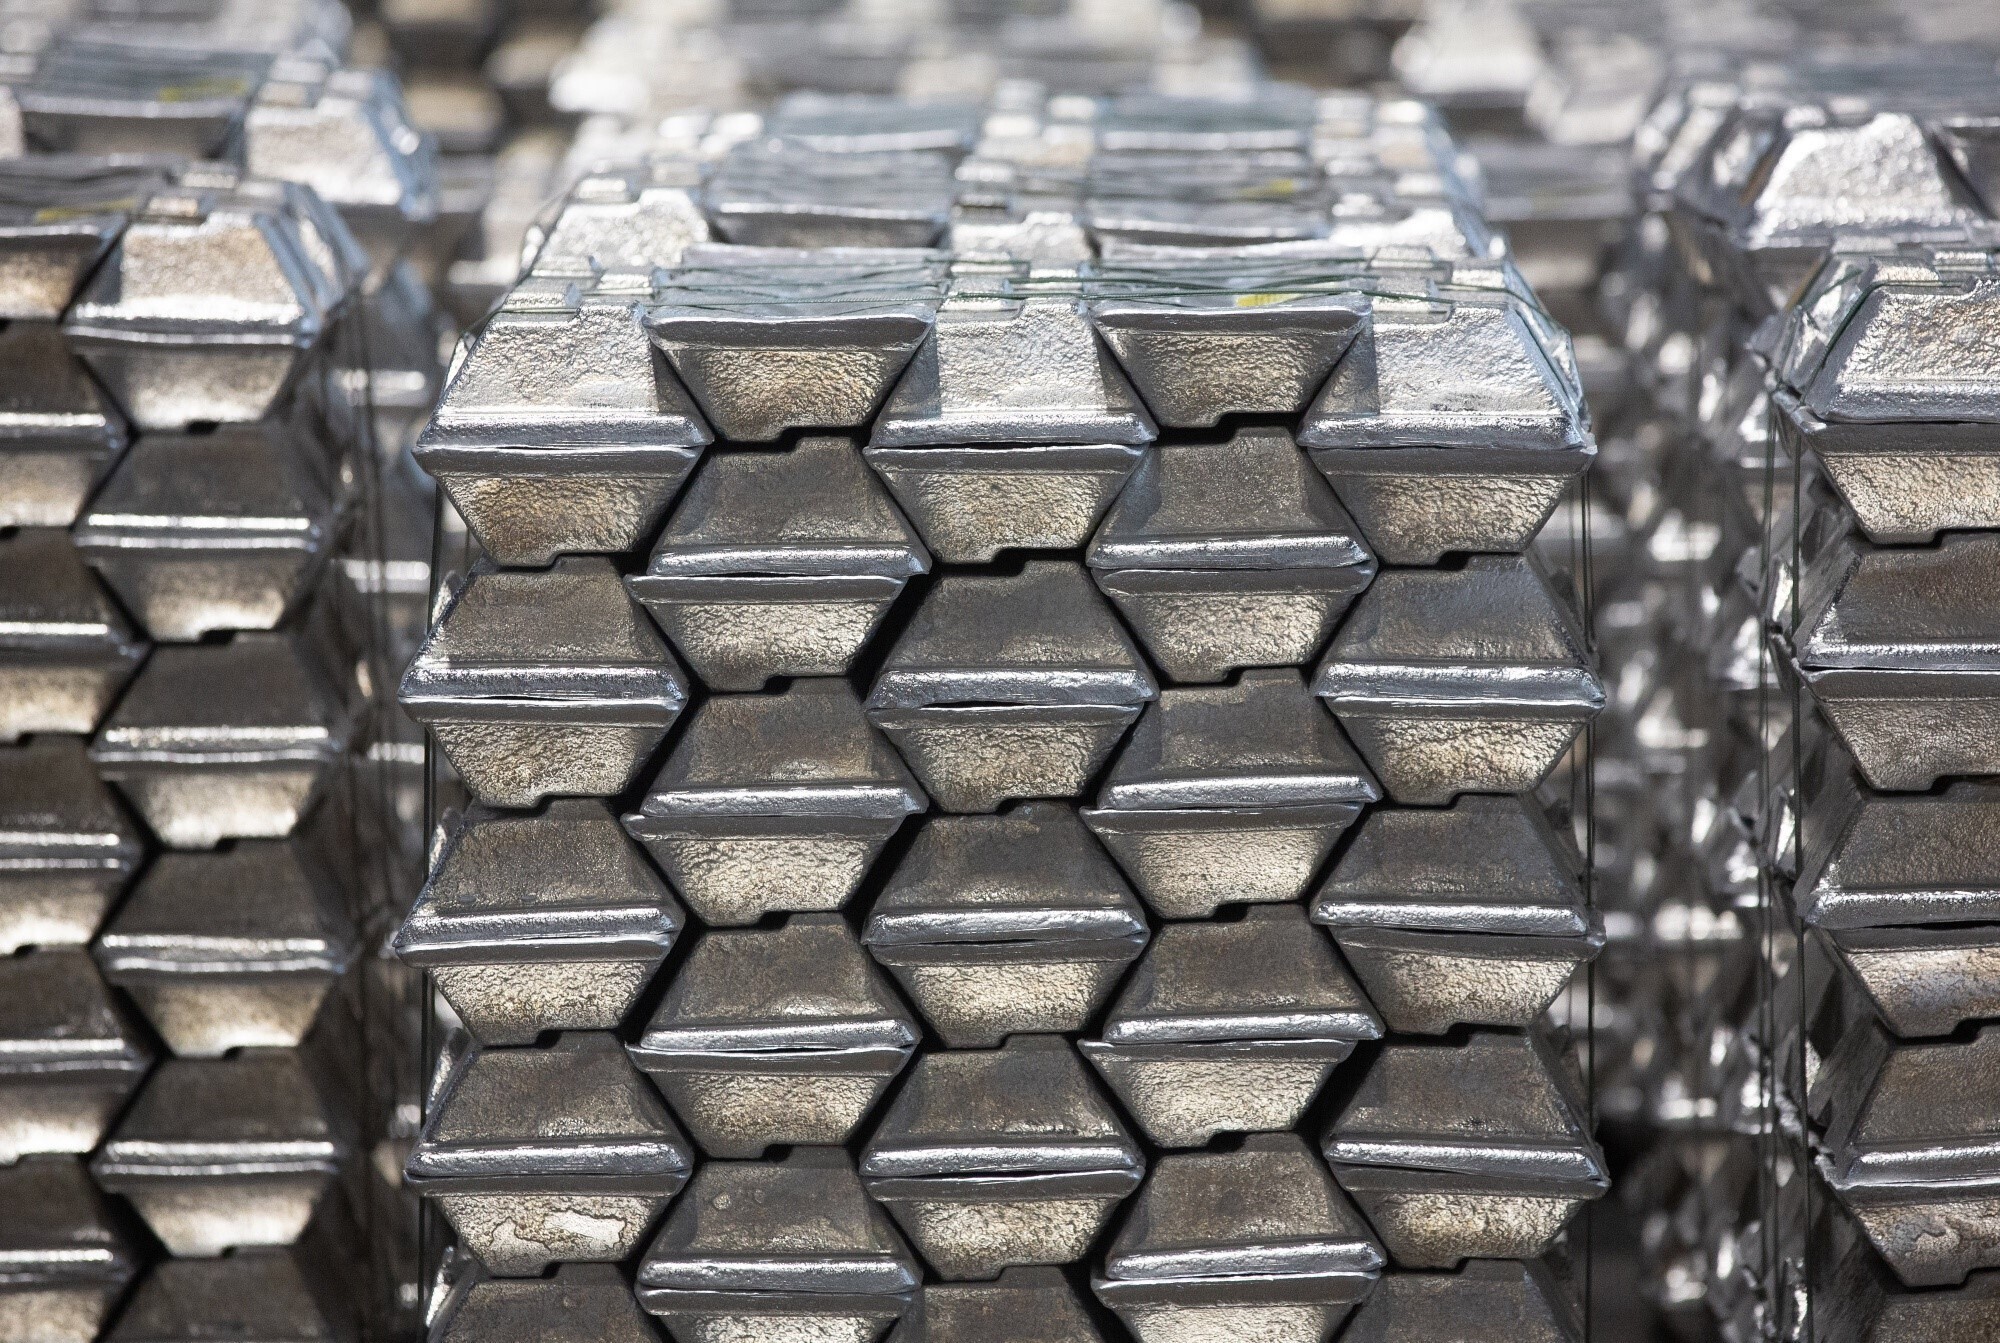 Russian-origin aluminium dominates 91% of LME warehouses in March